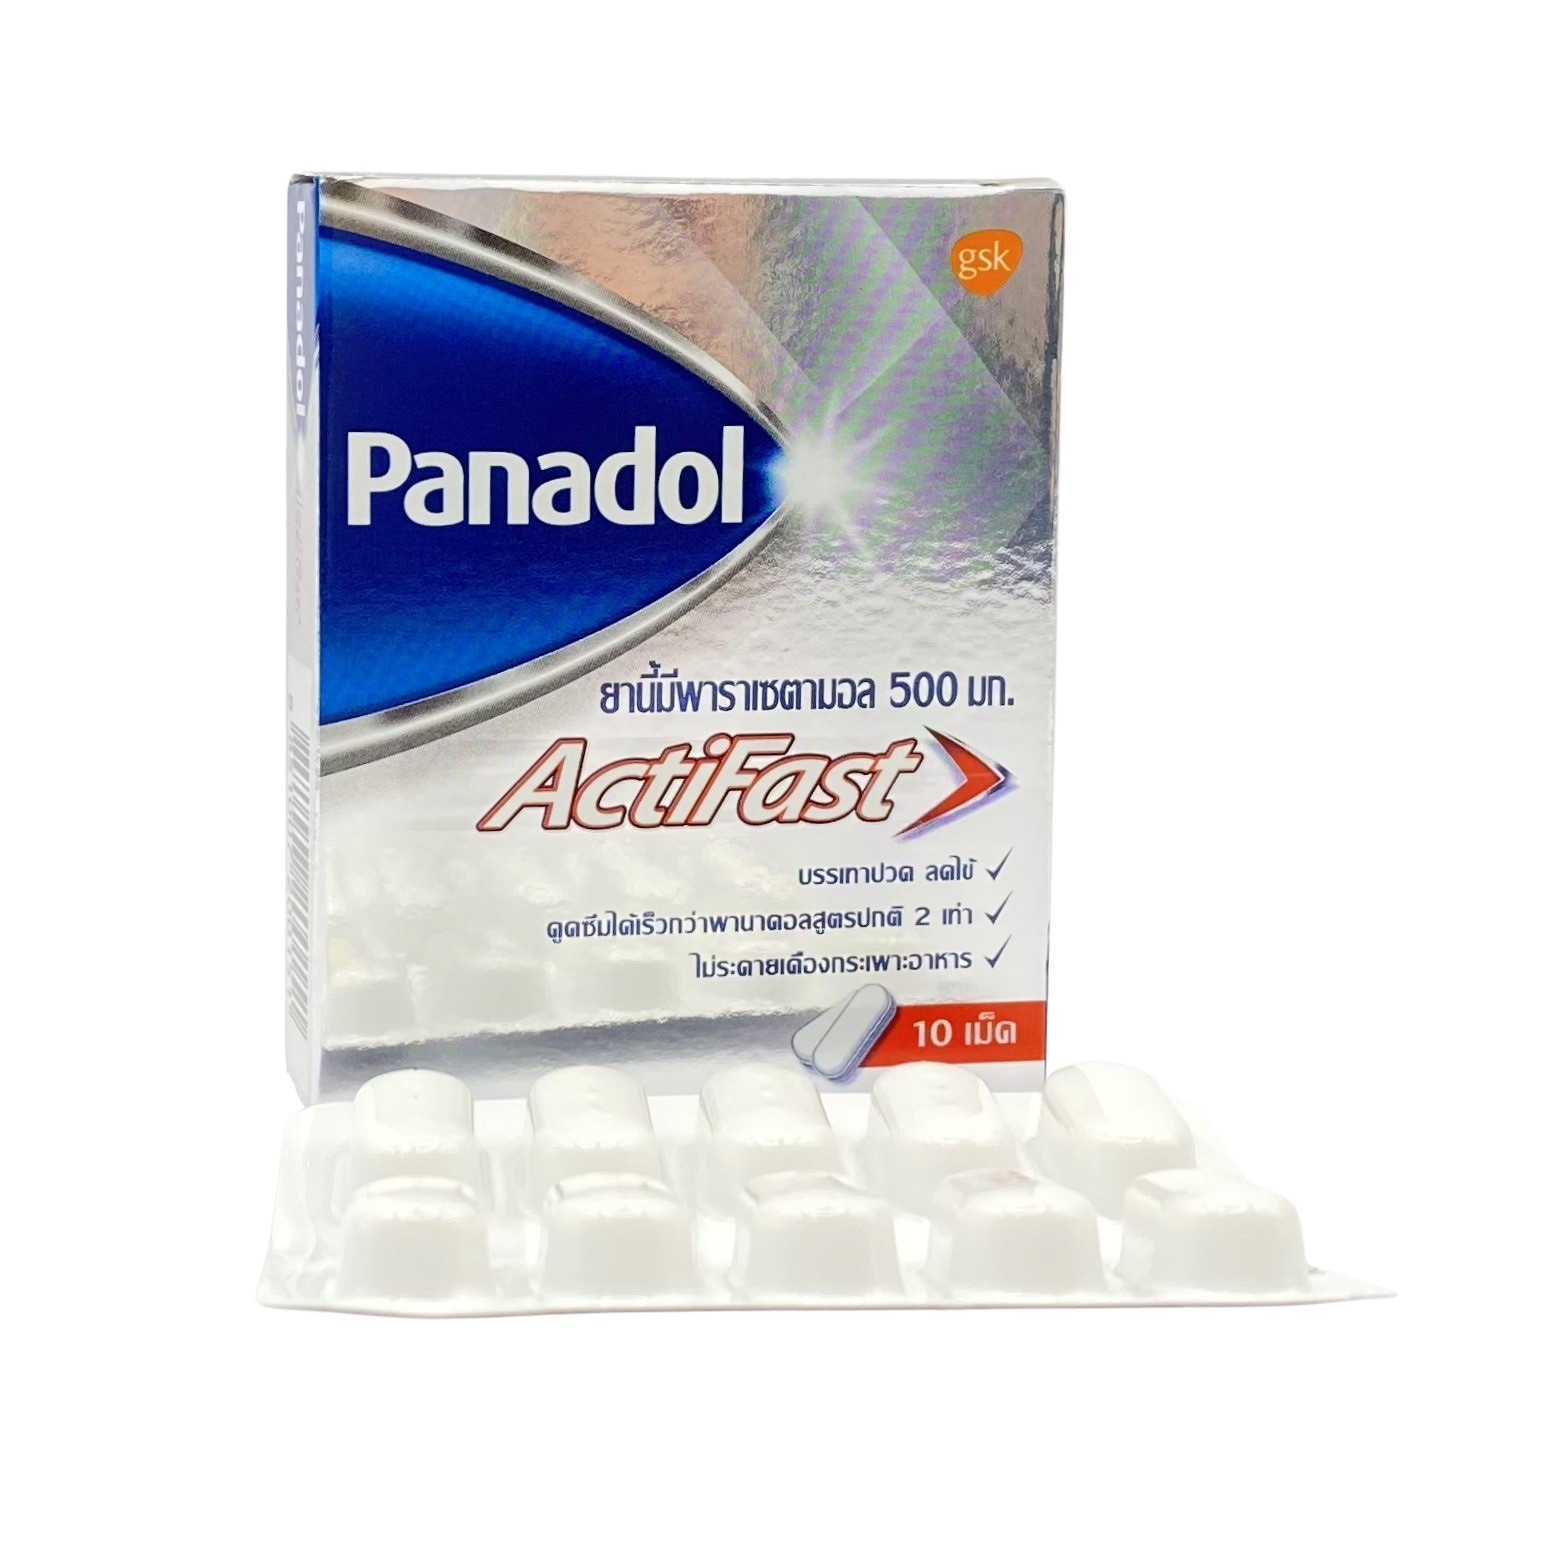 Panadol Actifast (ตัวยาพาราเซตามอล) - สั่งยาออนไลน์